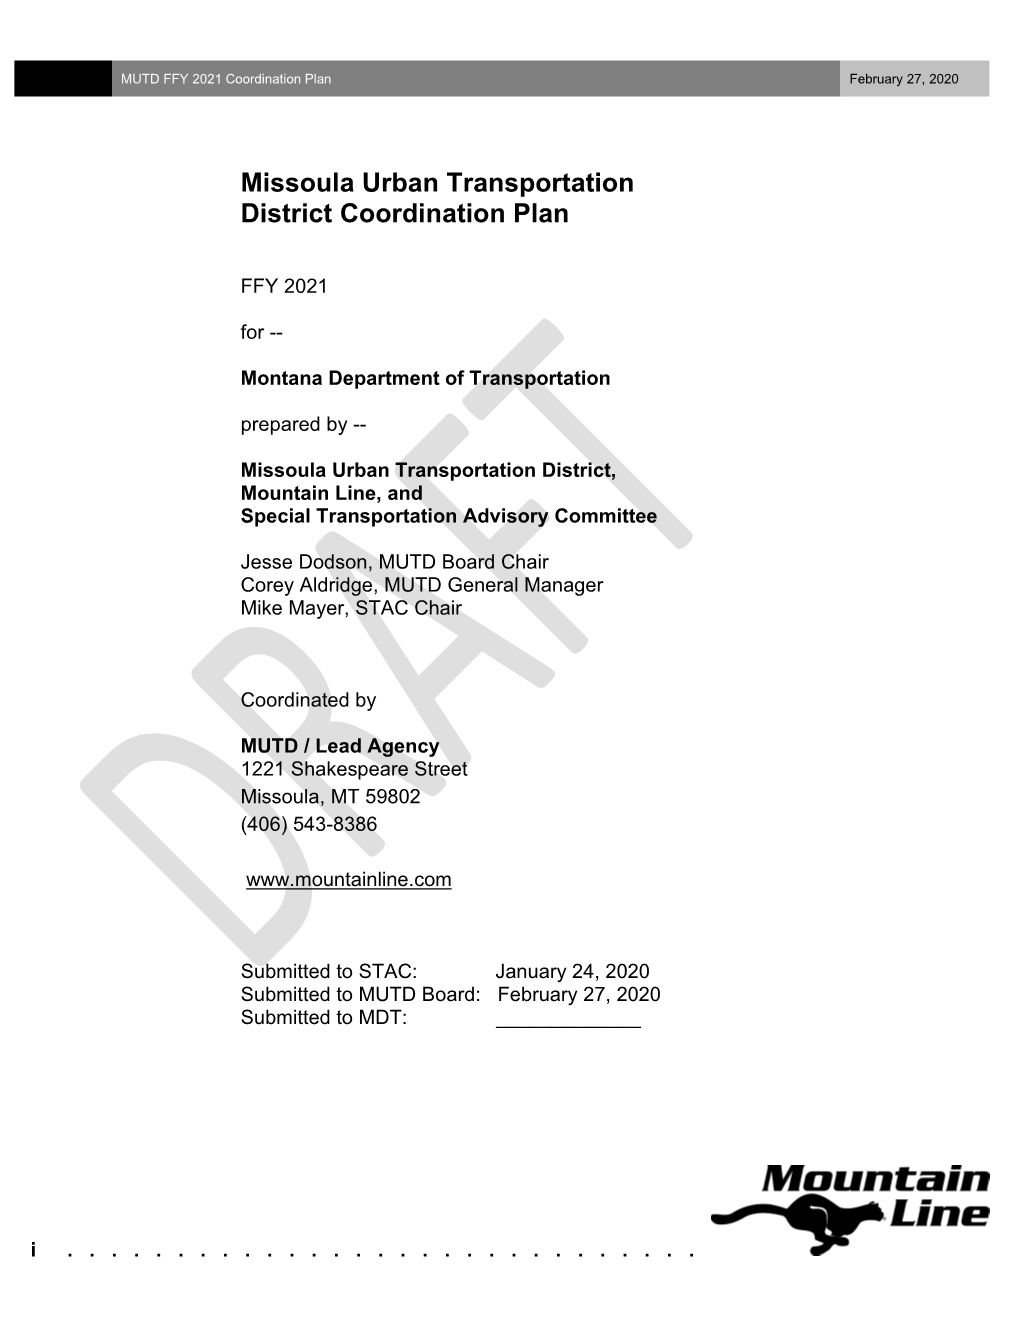 Missoula Urban Transportation District Coordination Plan